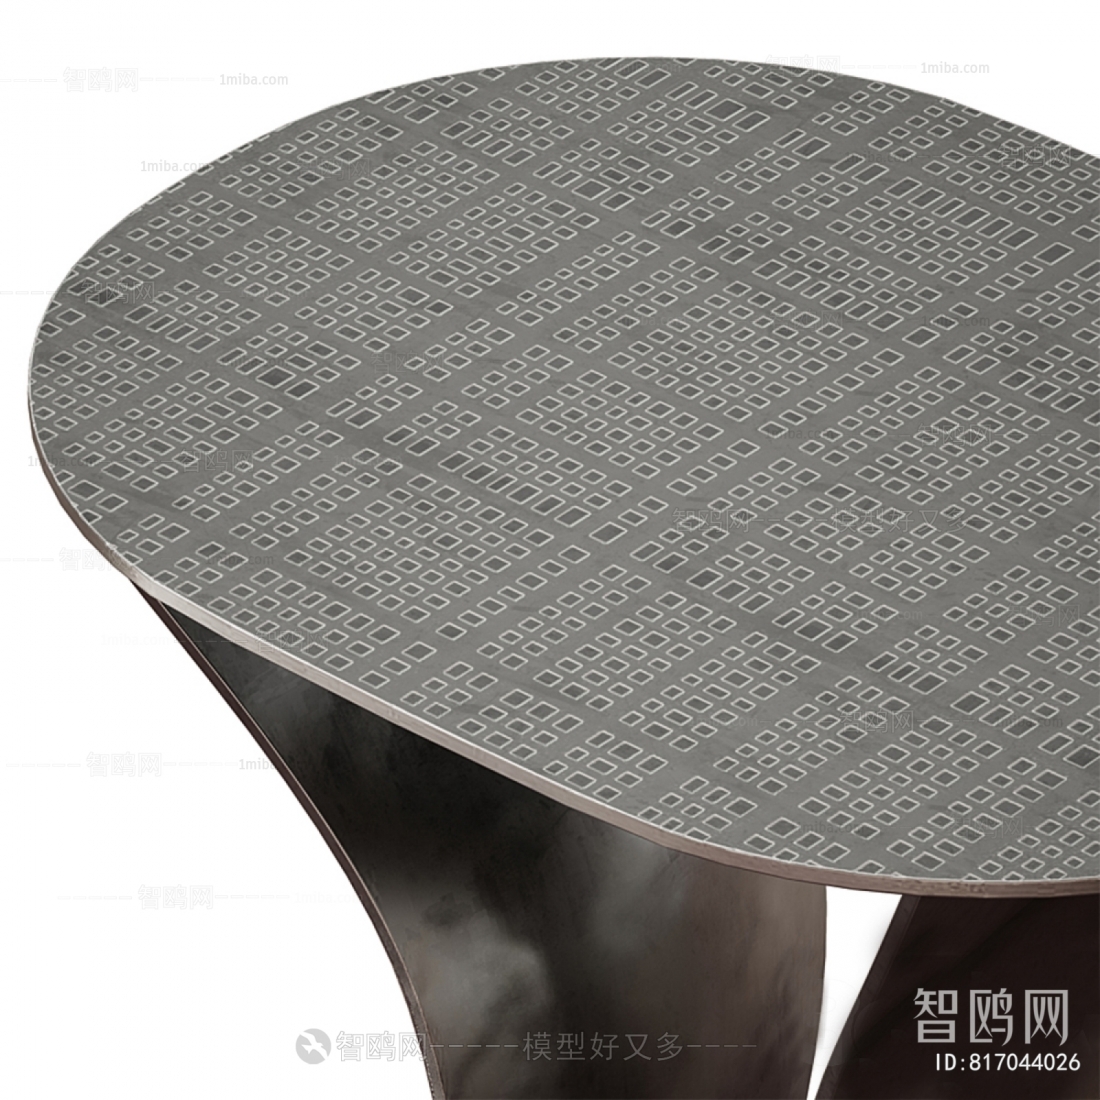 Modern Side Table/corner Table